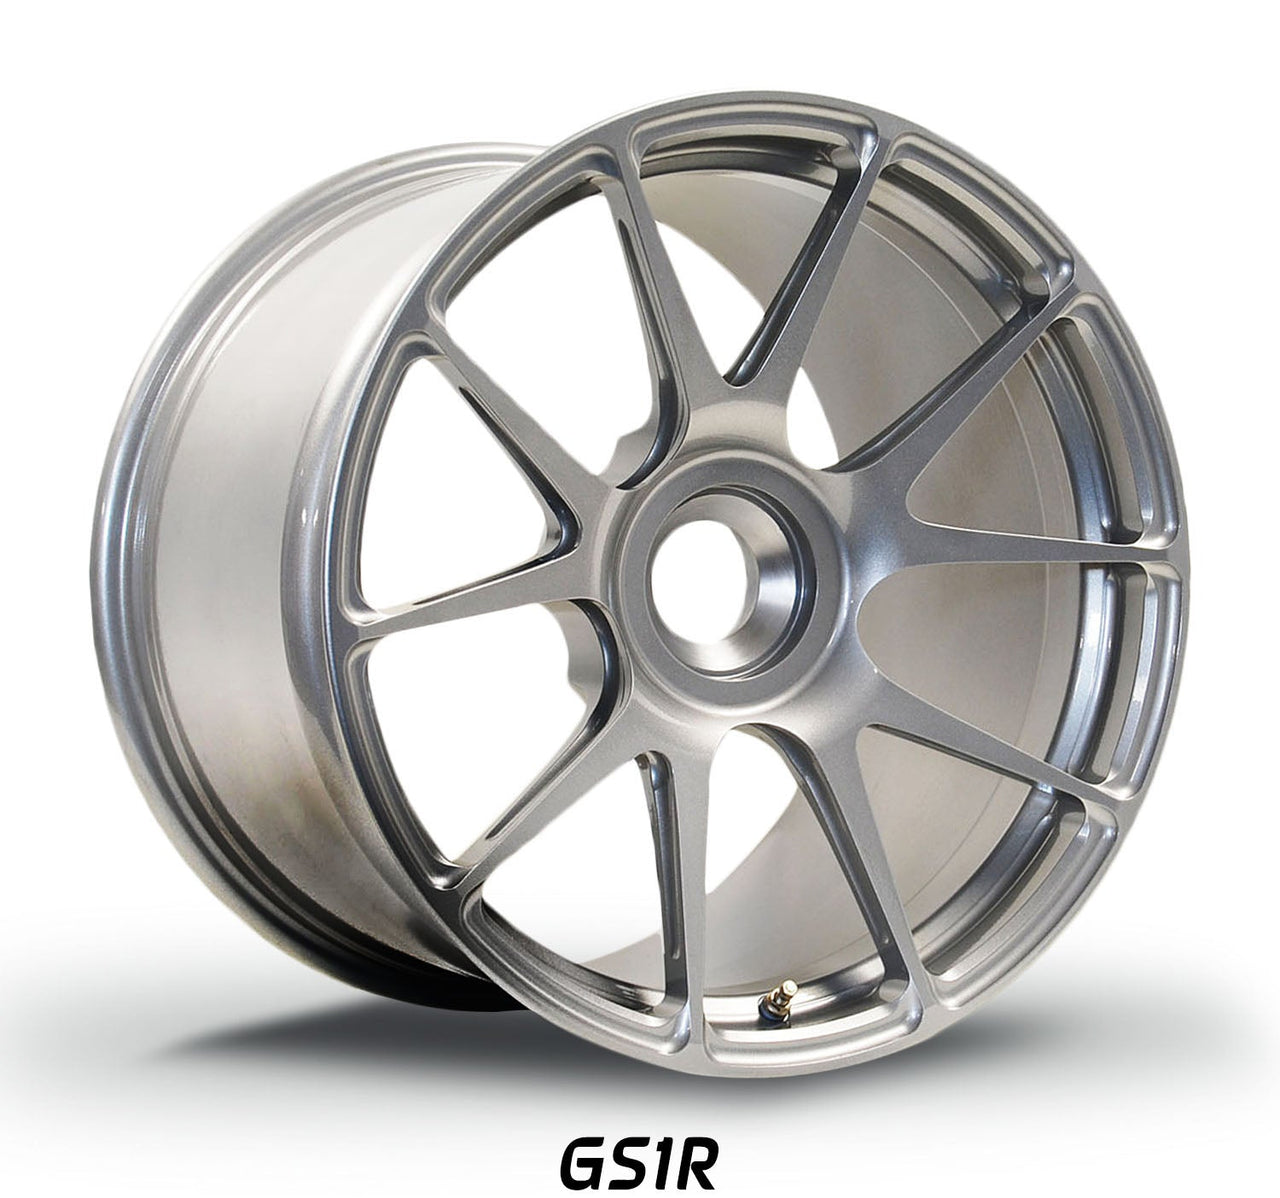 Hyper Silver Forgeline GS1R center lock for Porsche 991 GT3 best lightweight wheels for HPDE and Time Trials